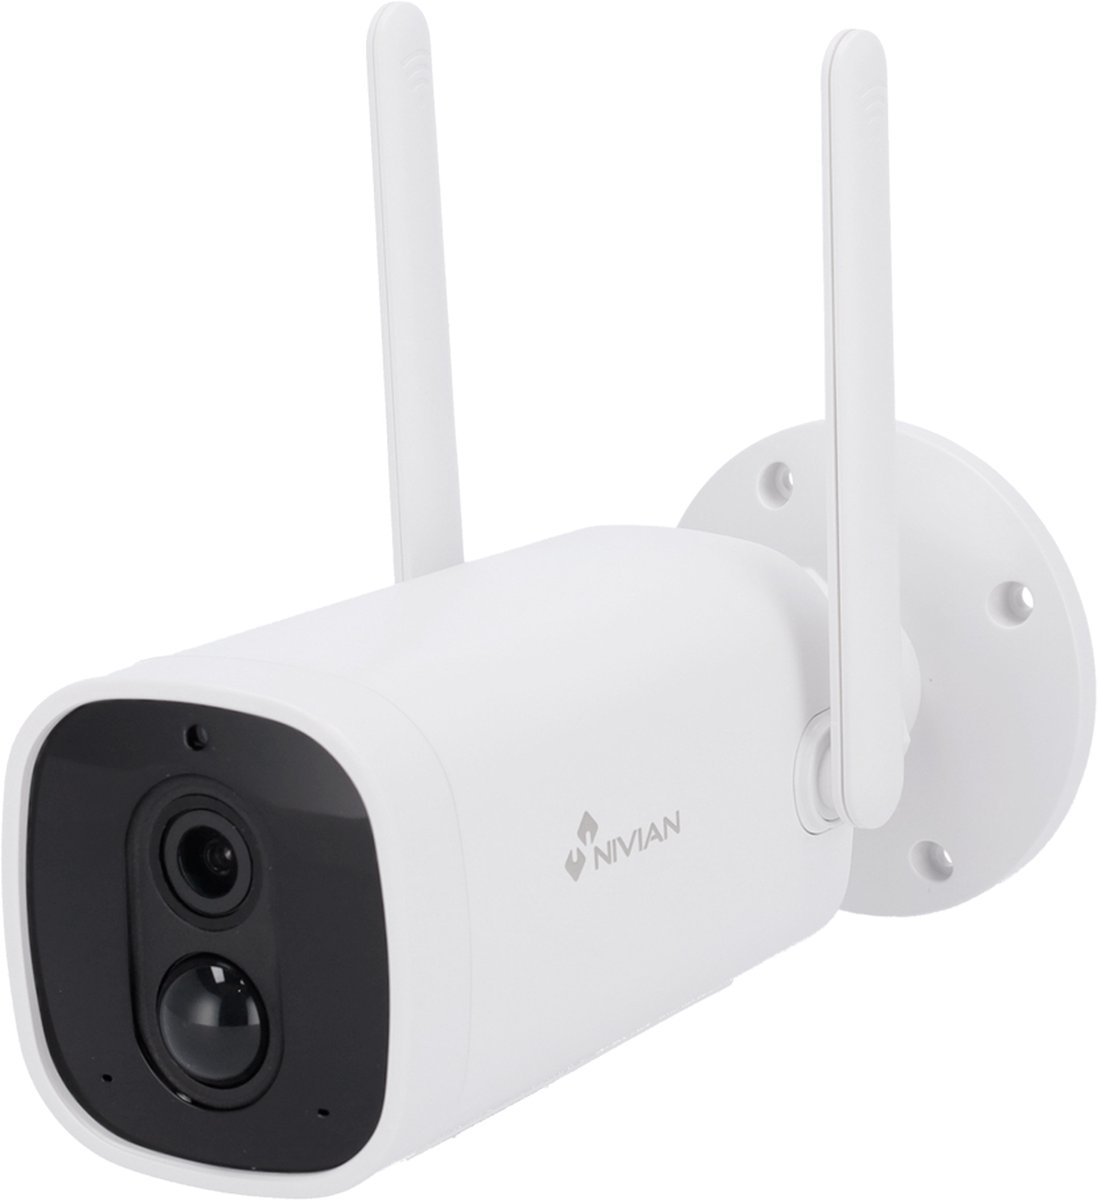 Beaumar ® Nivian NVS-IPC-06-BAT outdoorcamera - accu camera - wifi camera - beveiligingscamera - 3 jaar garantie - camera beveiliging draadloos wifi - 10400mah